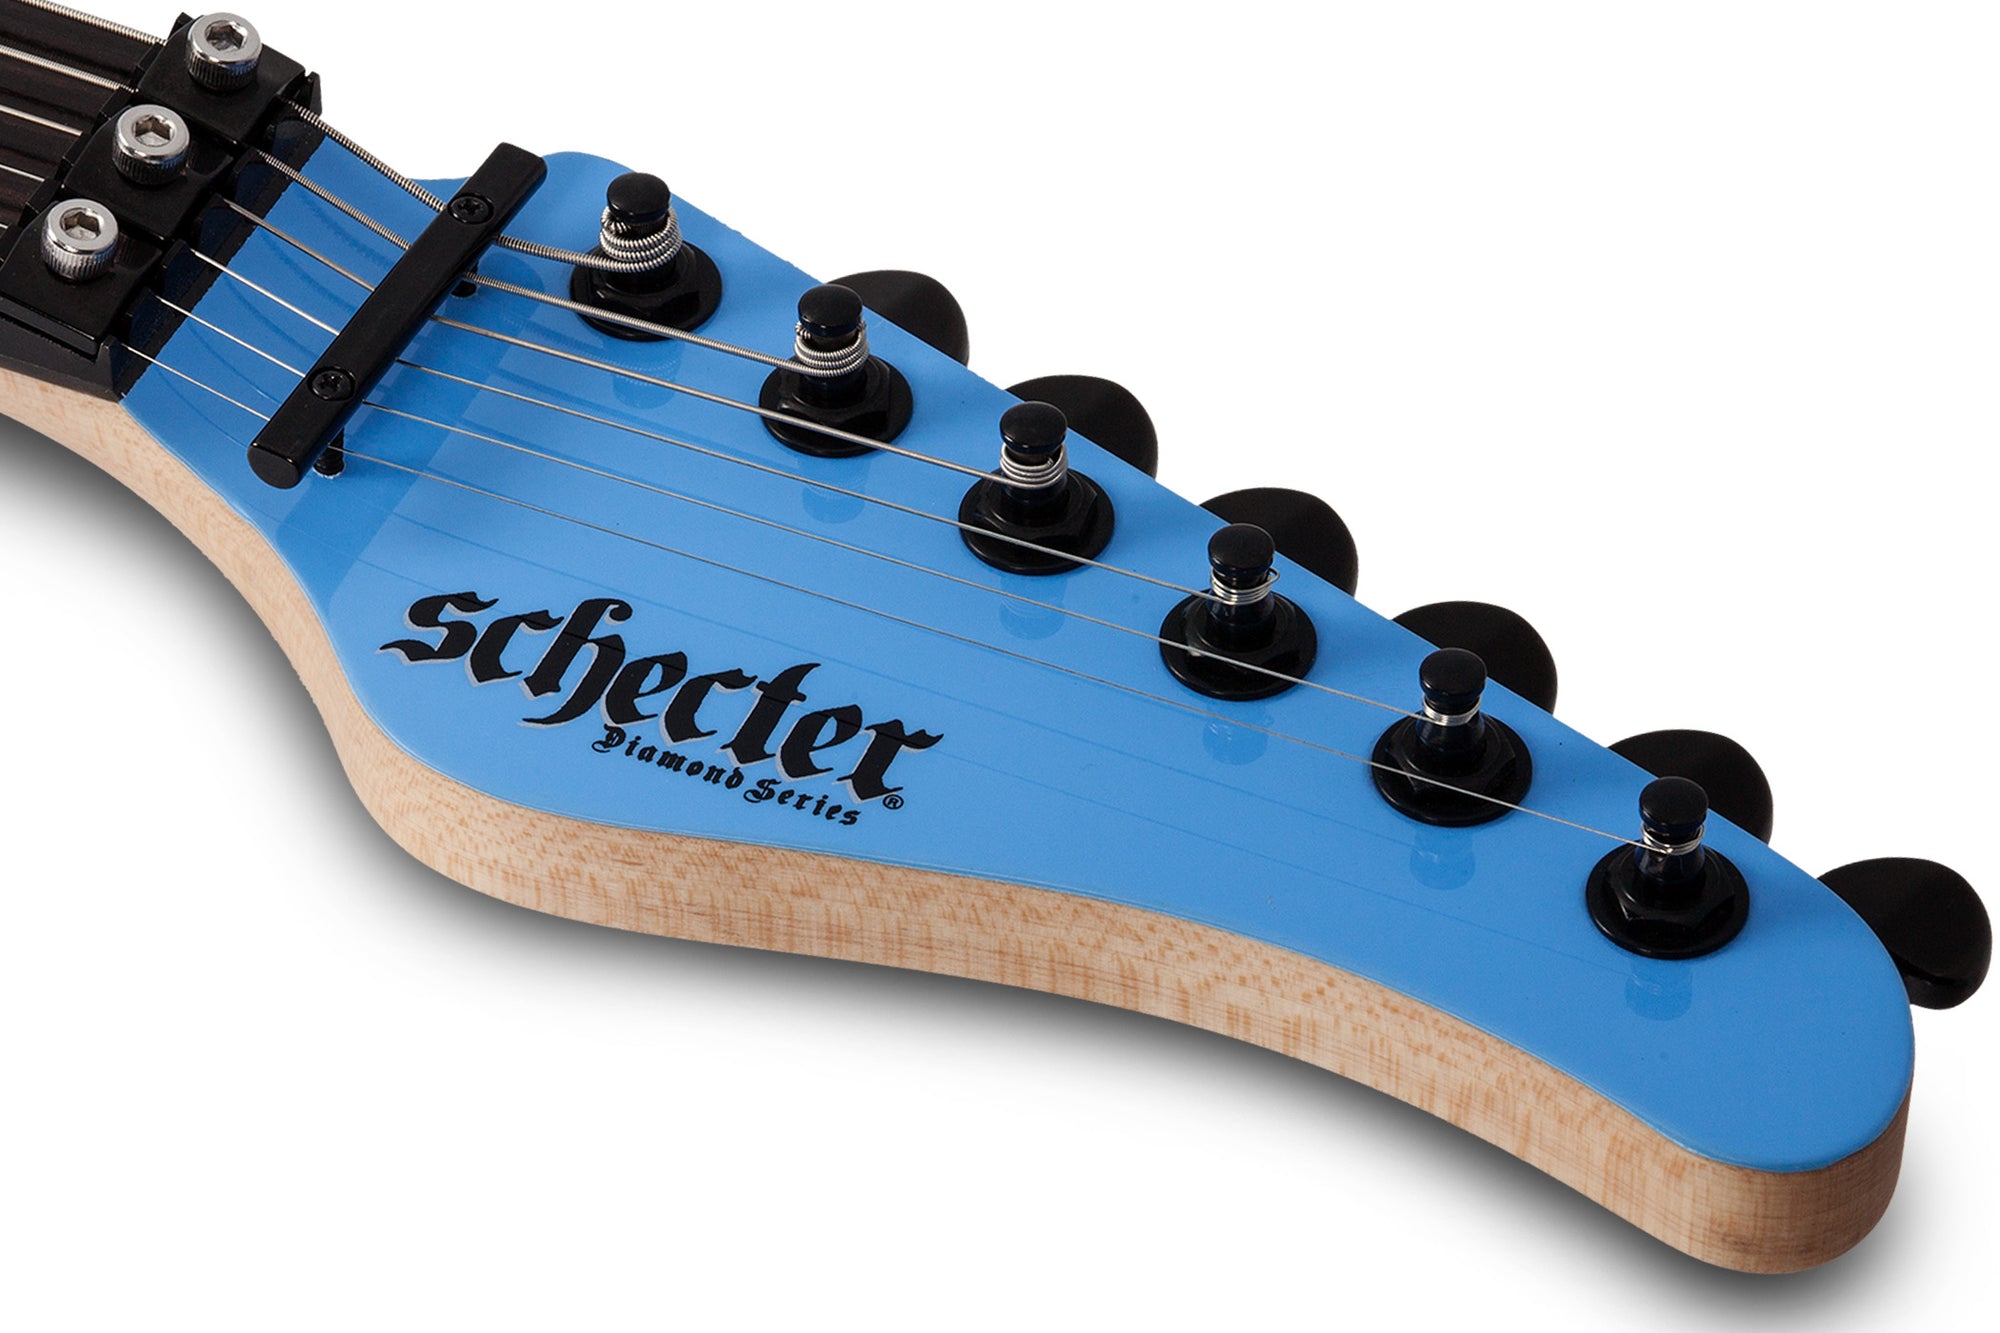 Schecter Sun Valley Super Shredder FR S in Riviera Blue RBLU SKU 1288 - The Guitar World